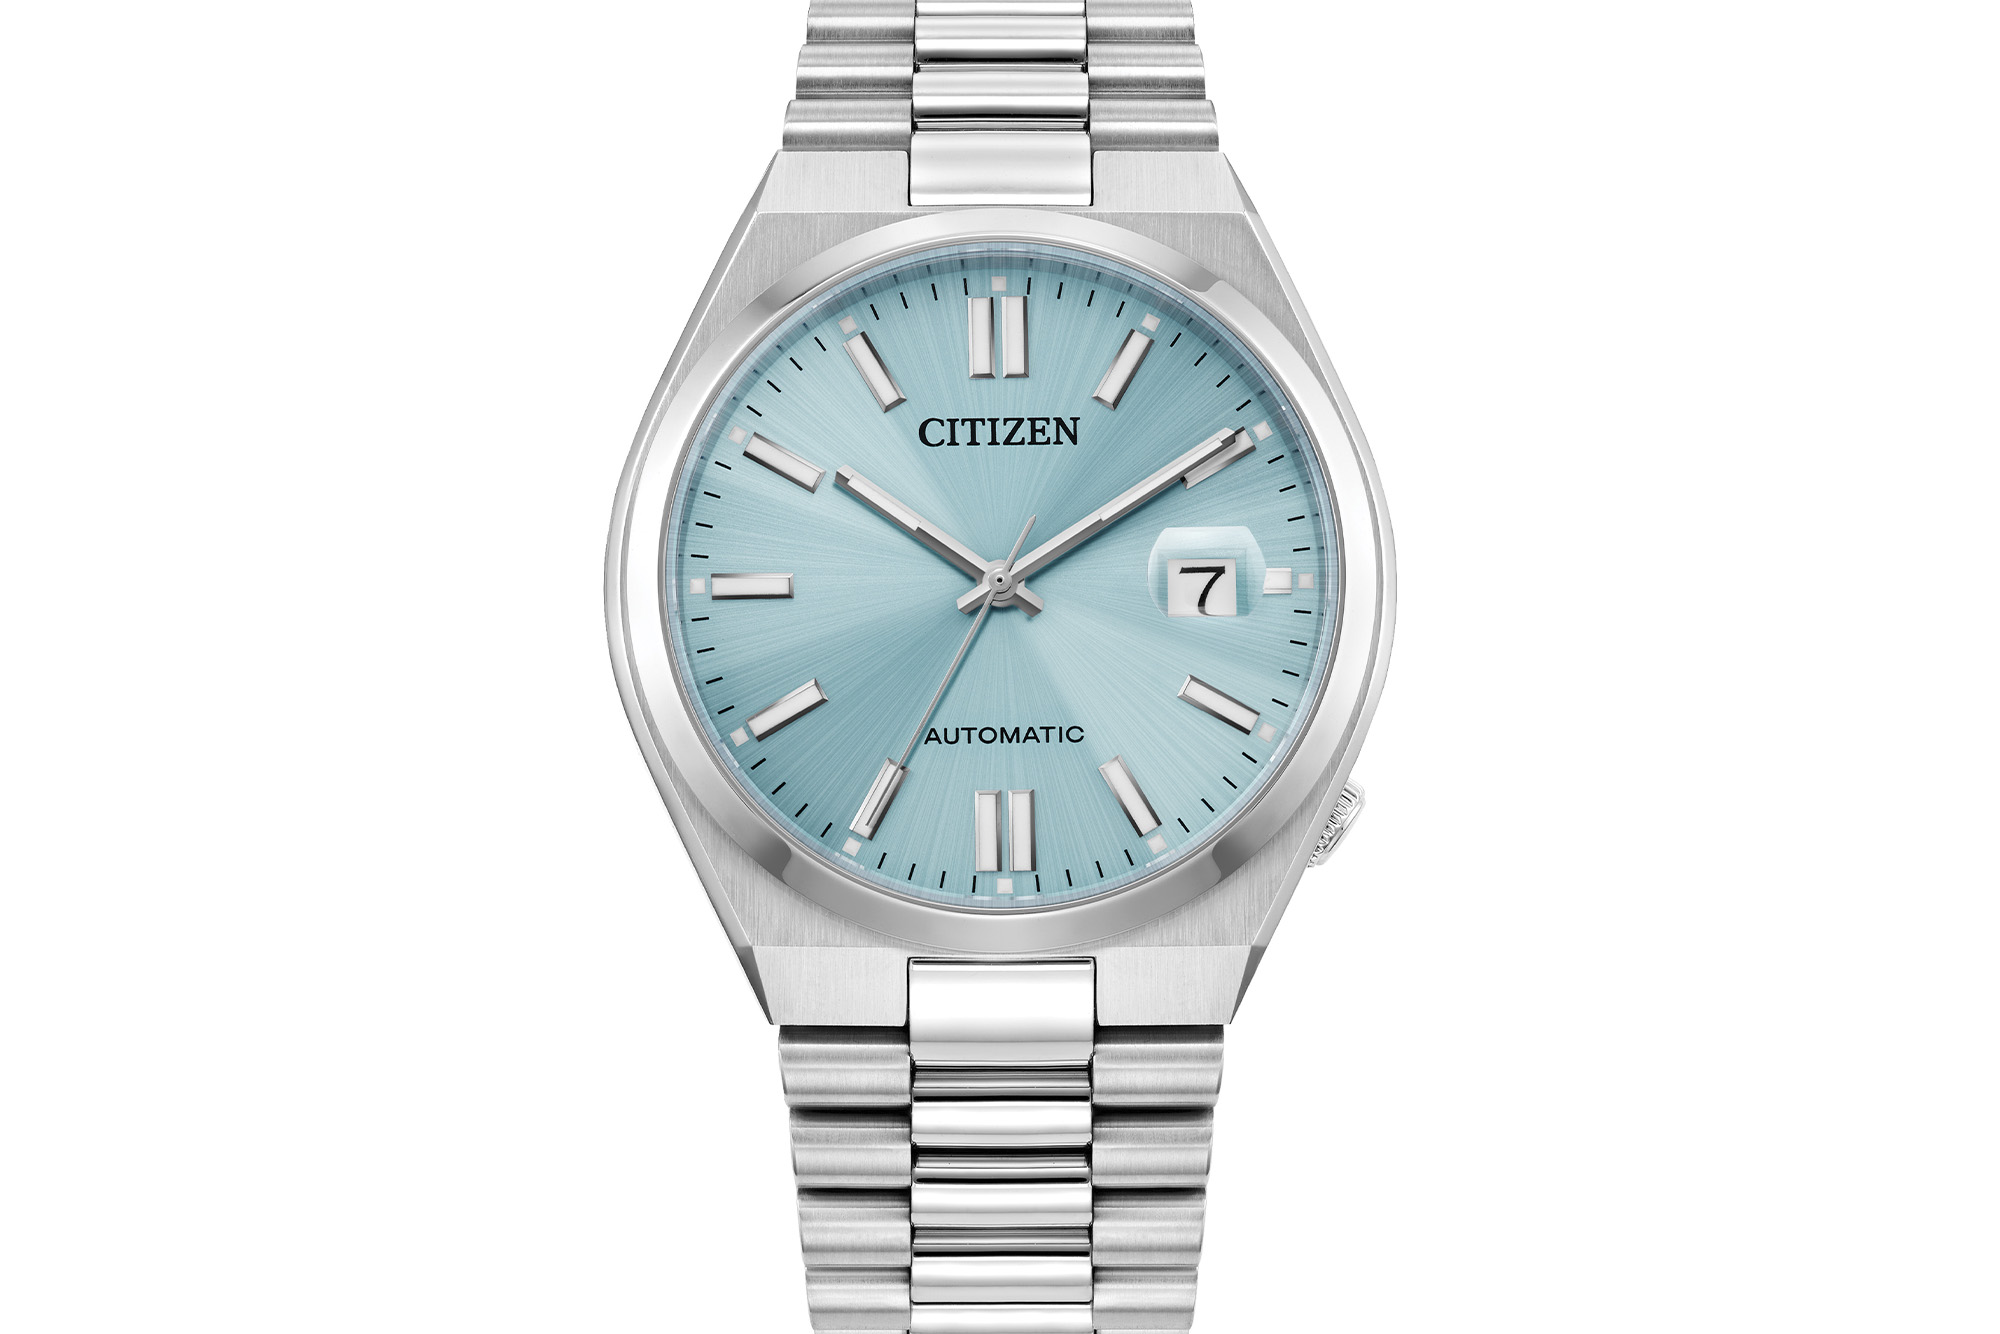 Citizen NJ015 Automatic Series “Tsuyosa” close up on blue dial